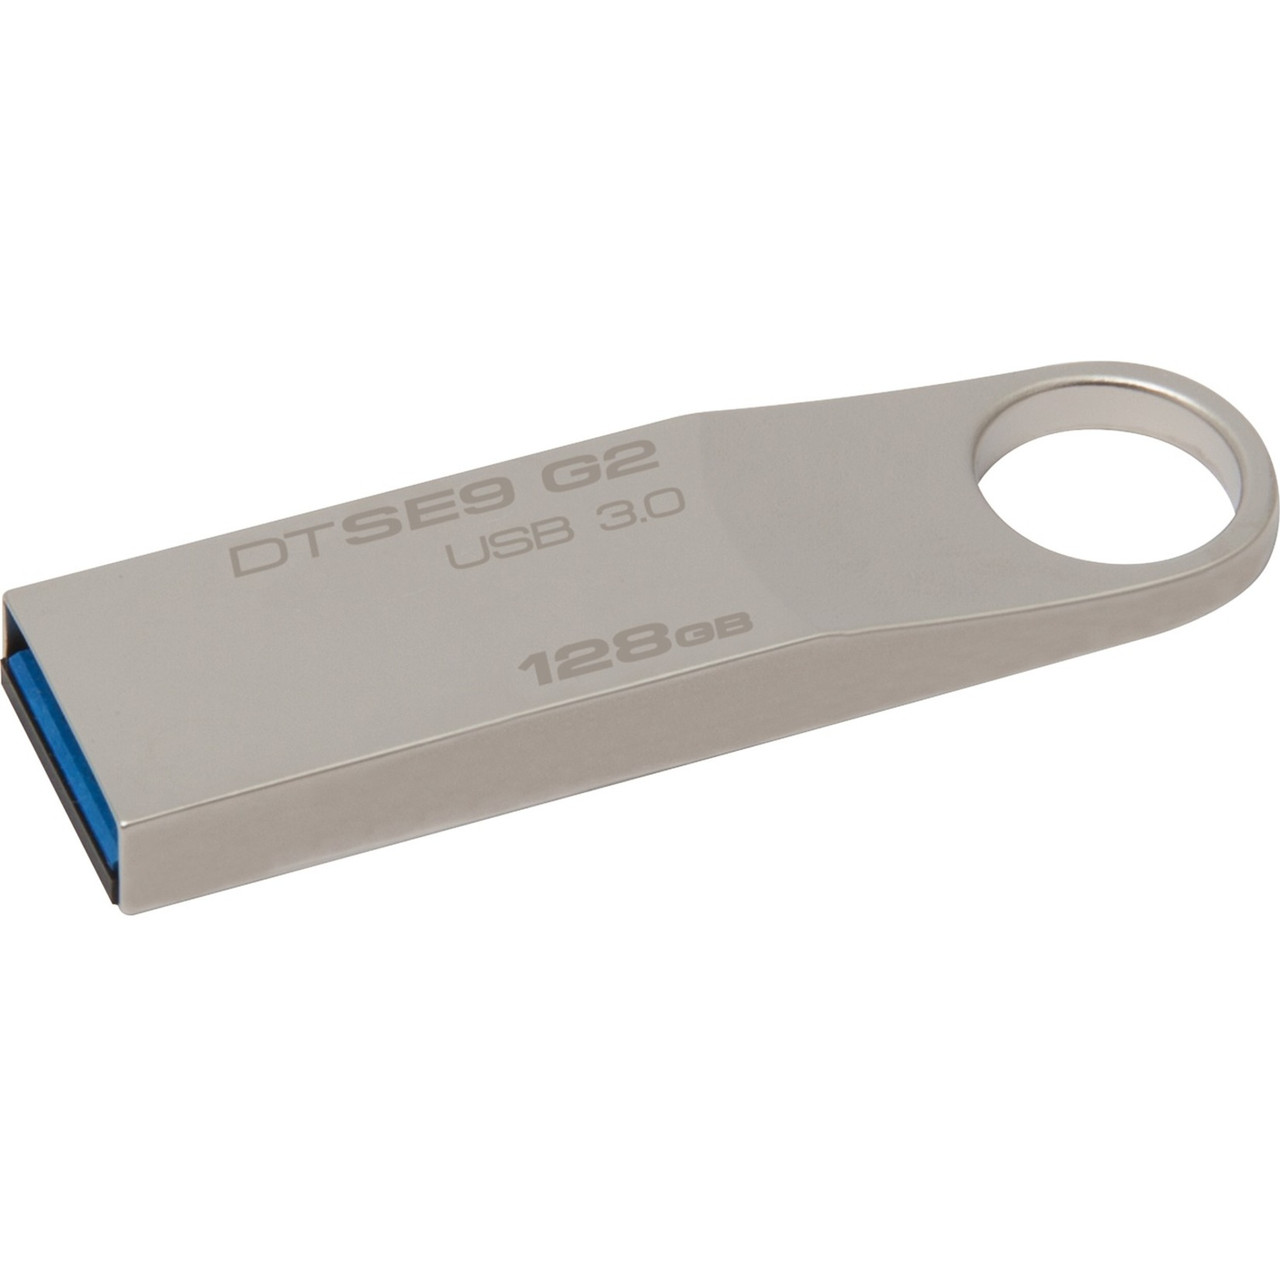 Kingston 128GB DataTraveler SE9 USB 3.0 Flash Drive - DTSE9G2/128GBCR